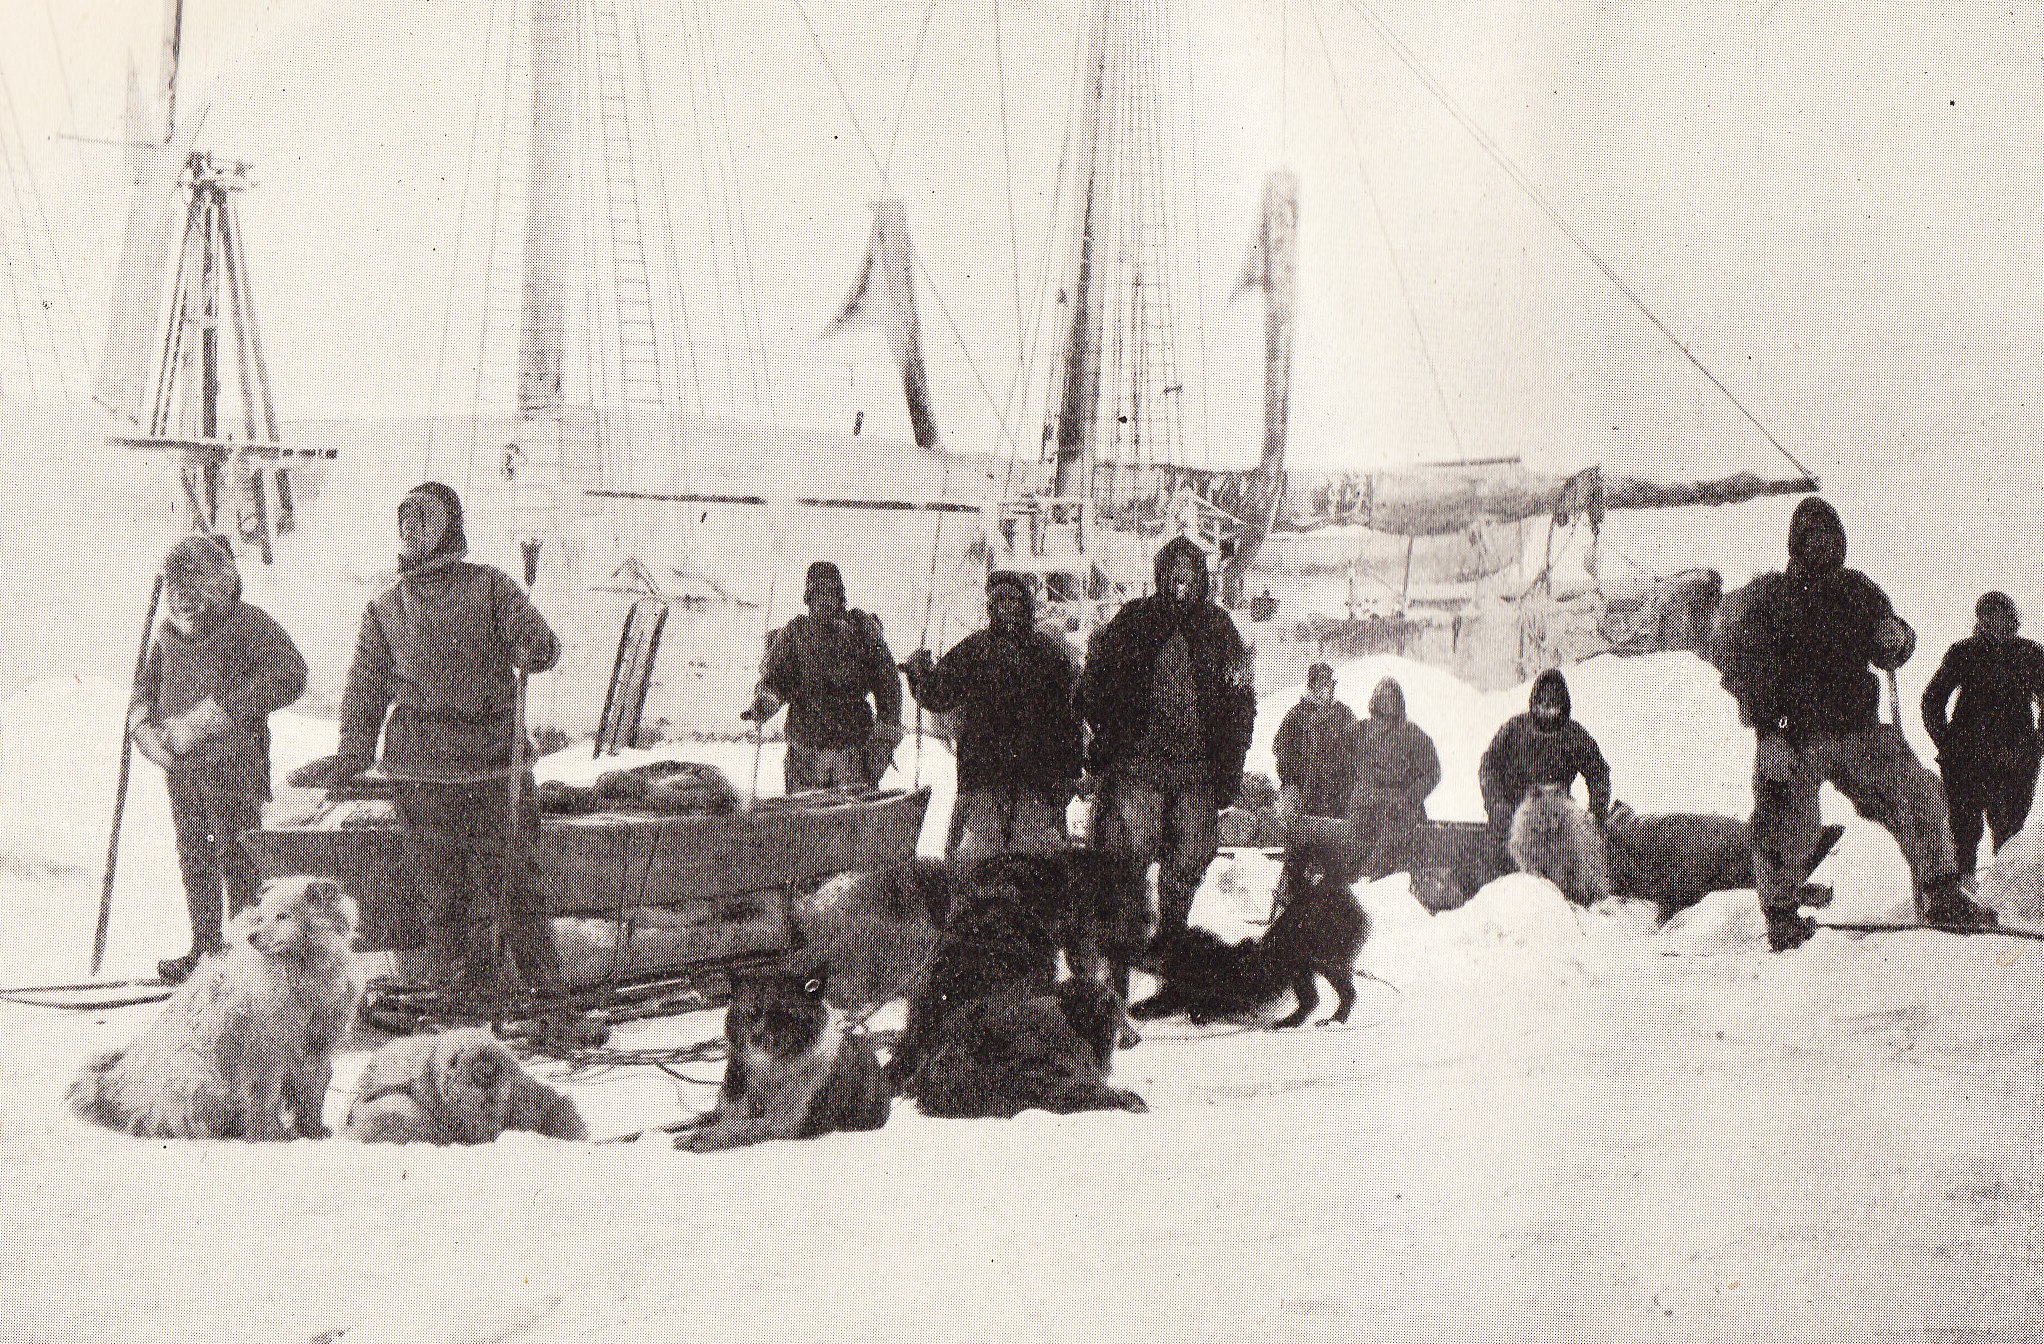 The Nansen expedition exploring Arctic sea ice